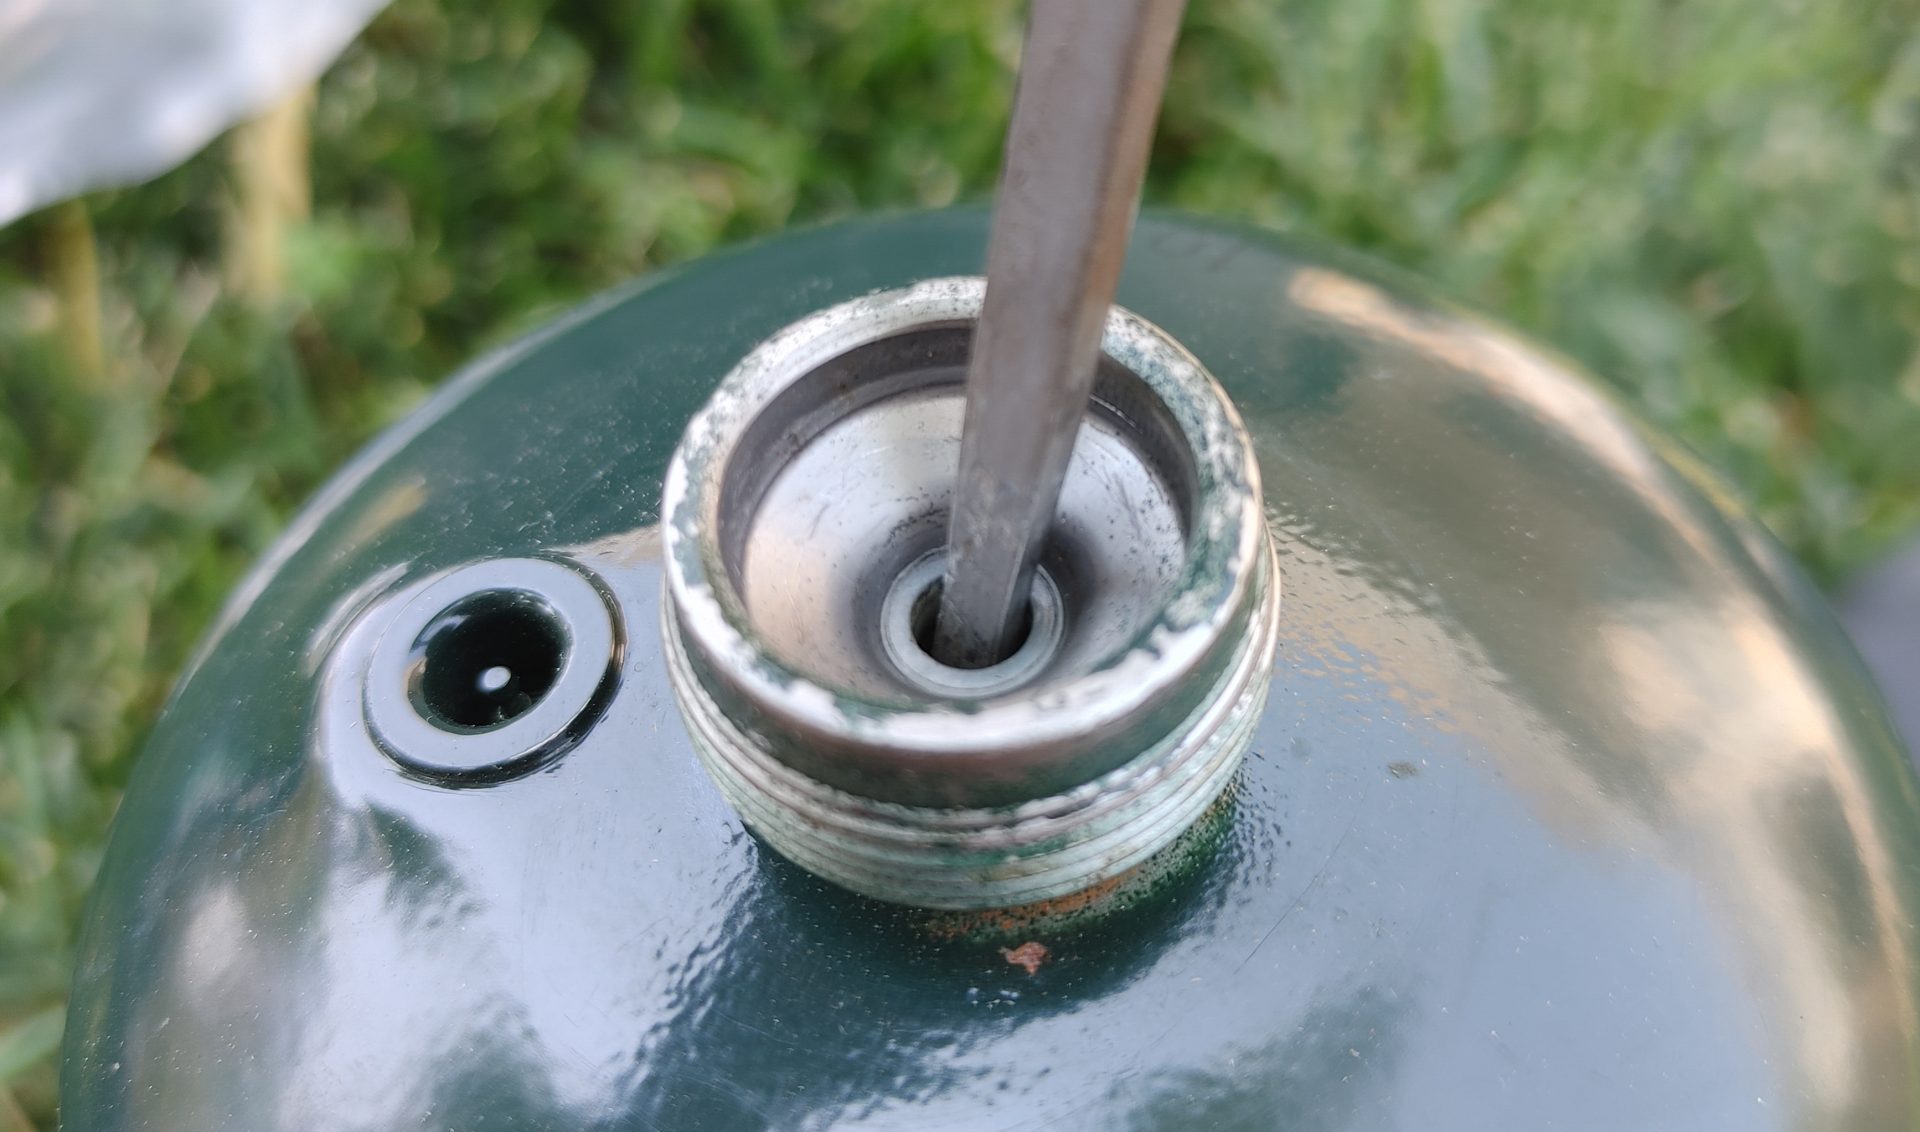 Propane tank valve removal tool 